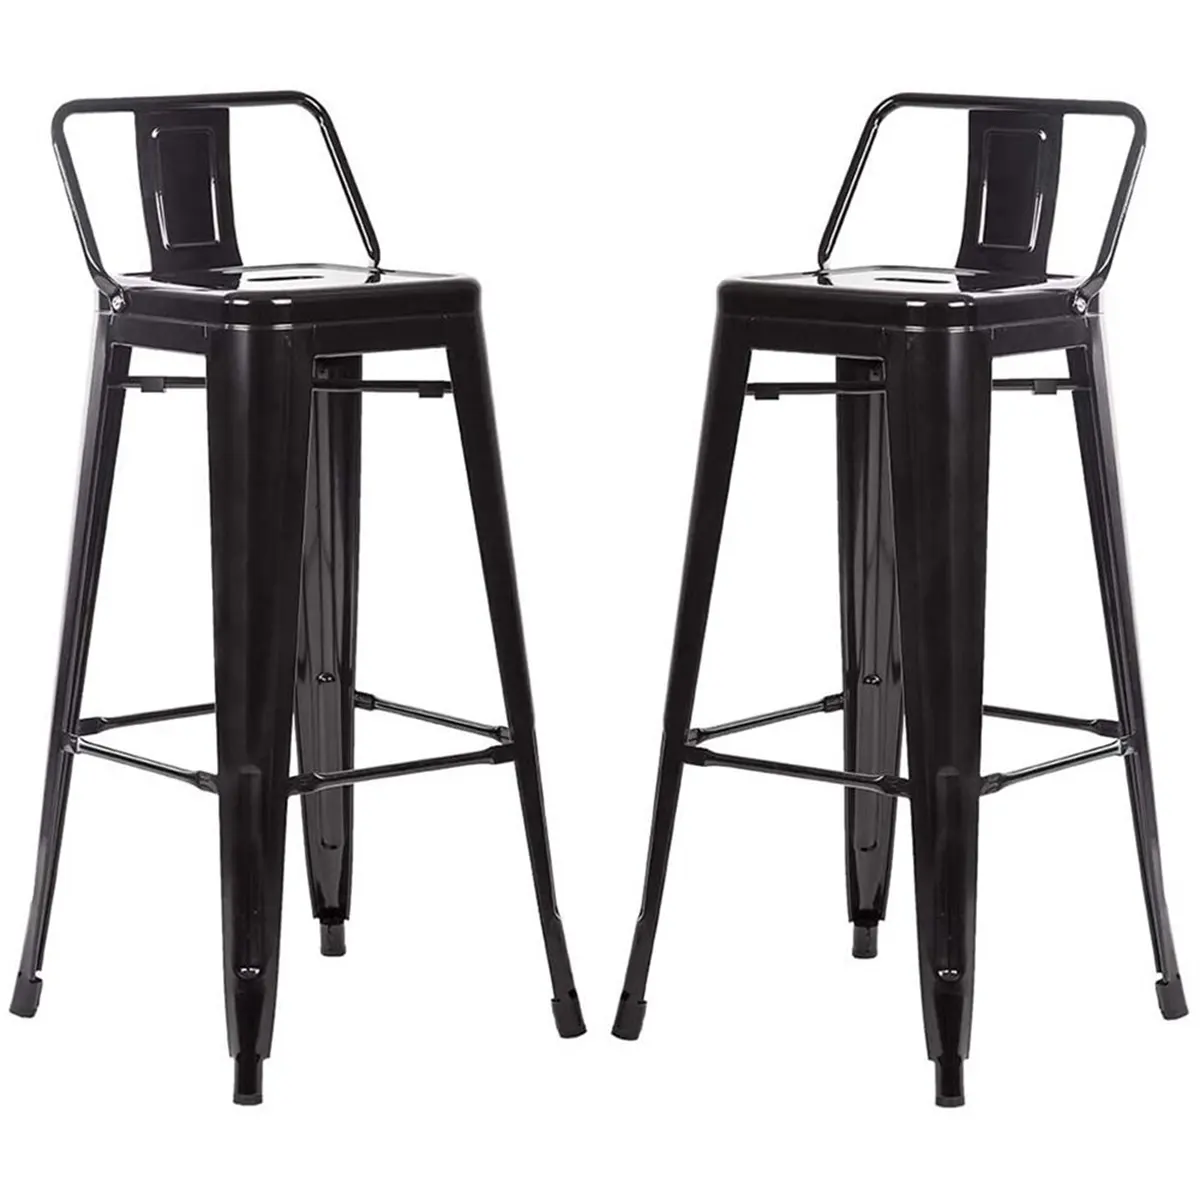 Actory-Sillas de Bar apilables retro de Ferro café, de metal esszimmerstuhl, sillas de bar